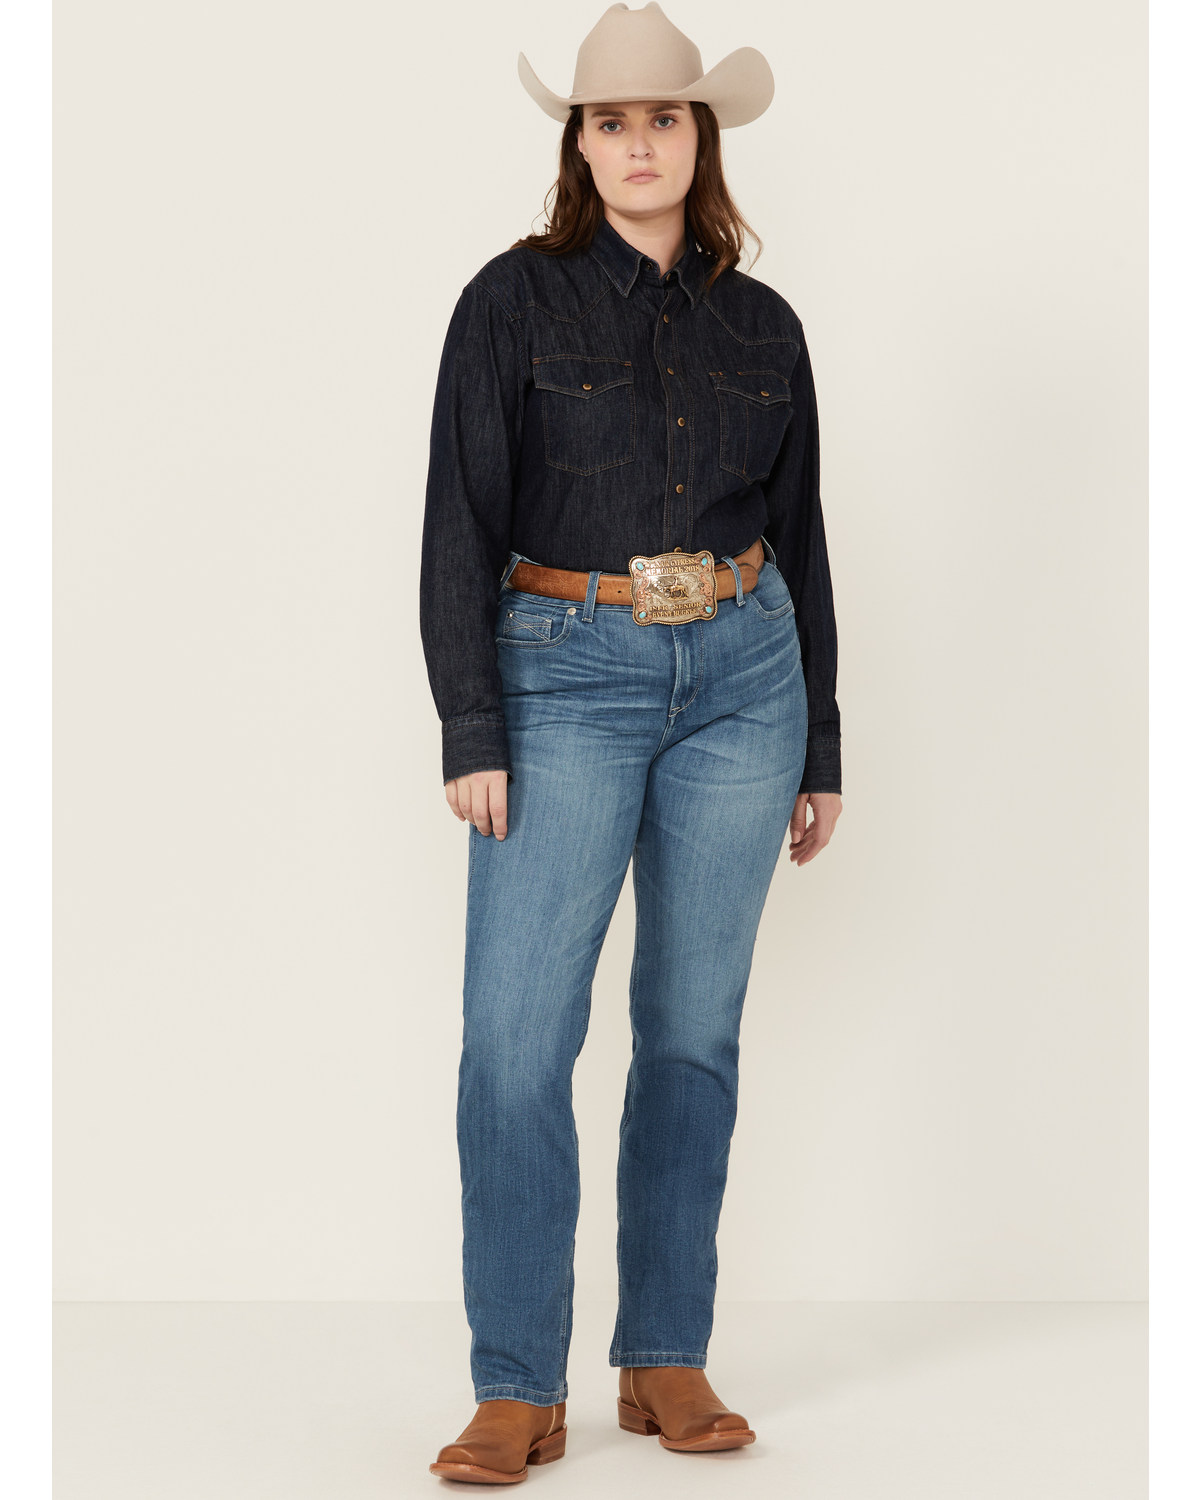 Ariat Women's R.E.A.L Medium Wash Perfect Rise Clover Straight Jeans - Plus